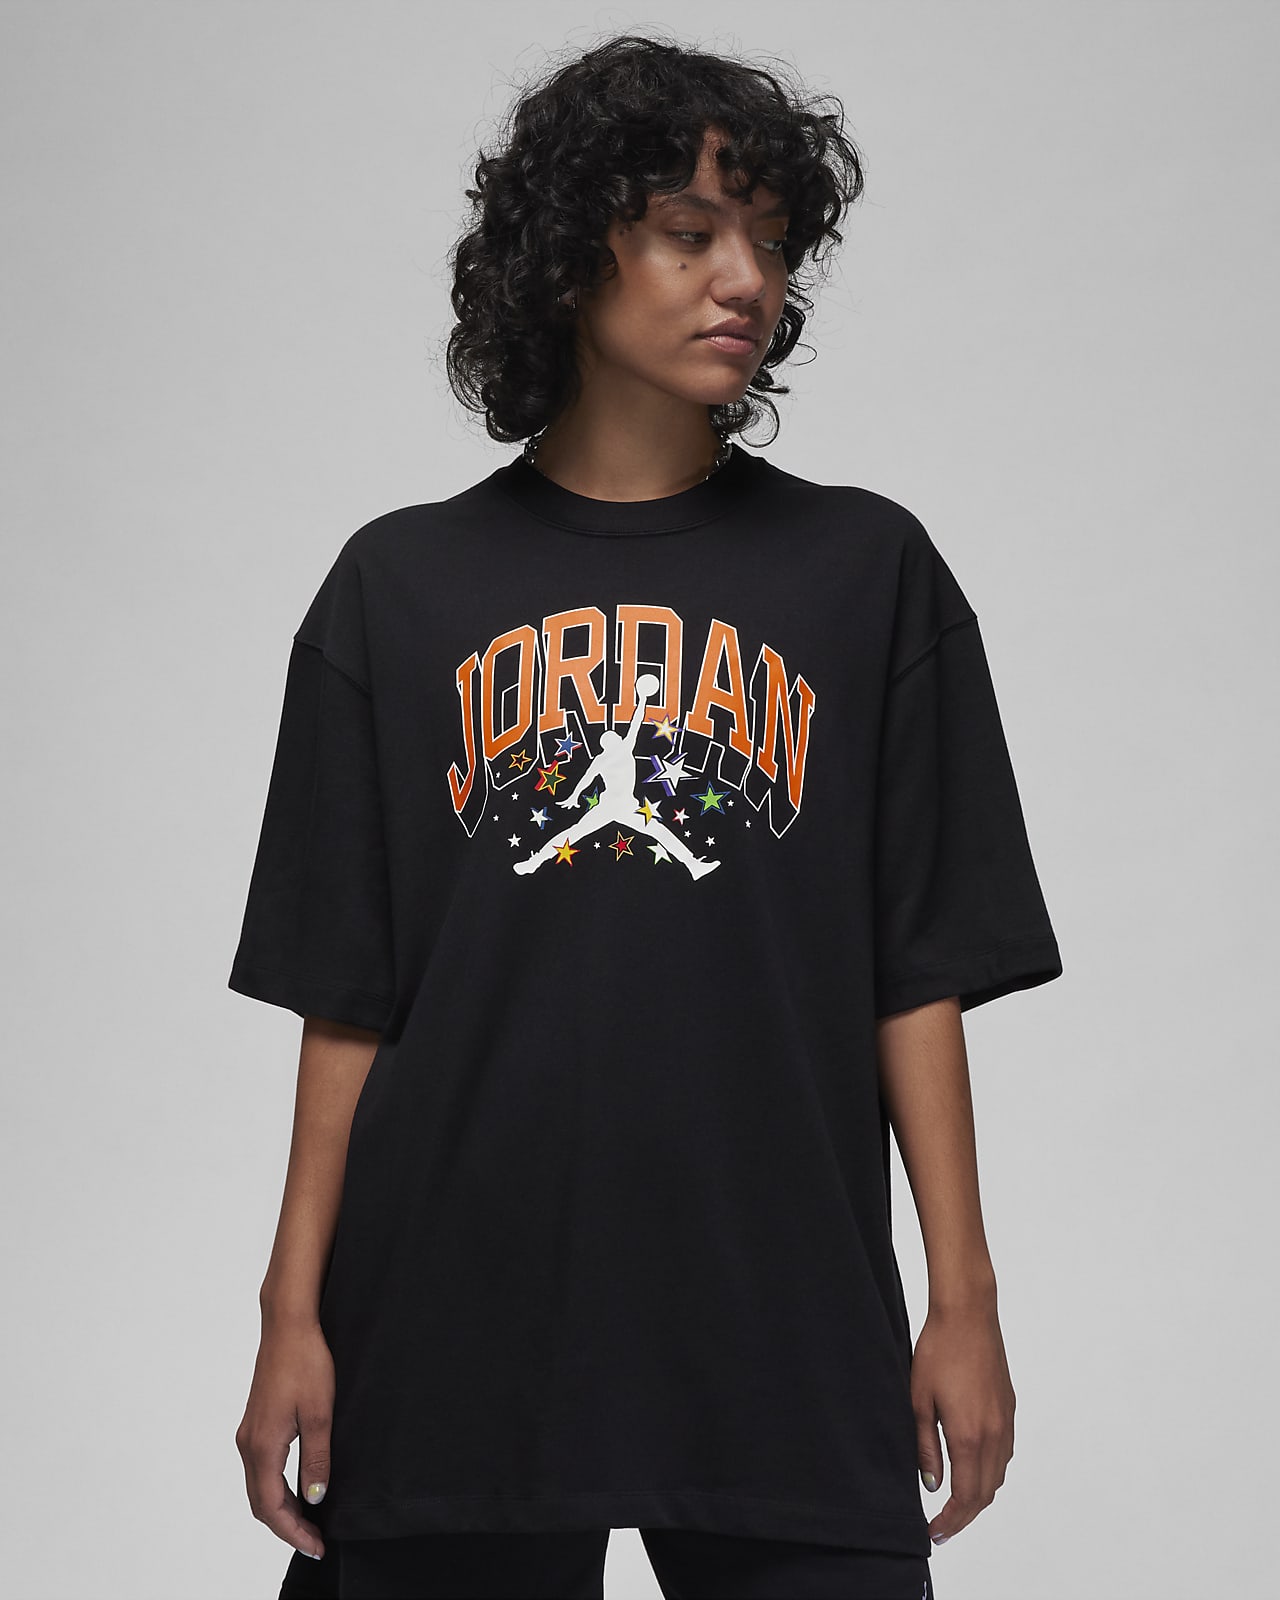 Jordan Women's T-Shirt